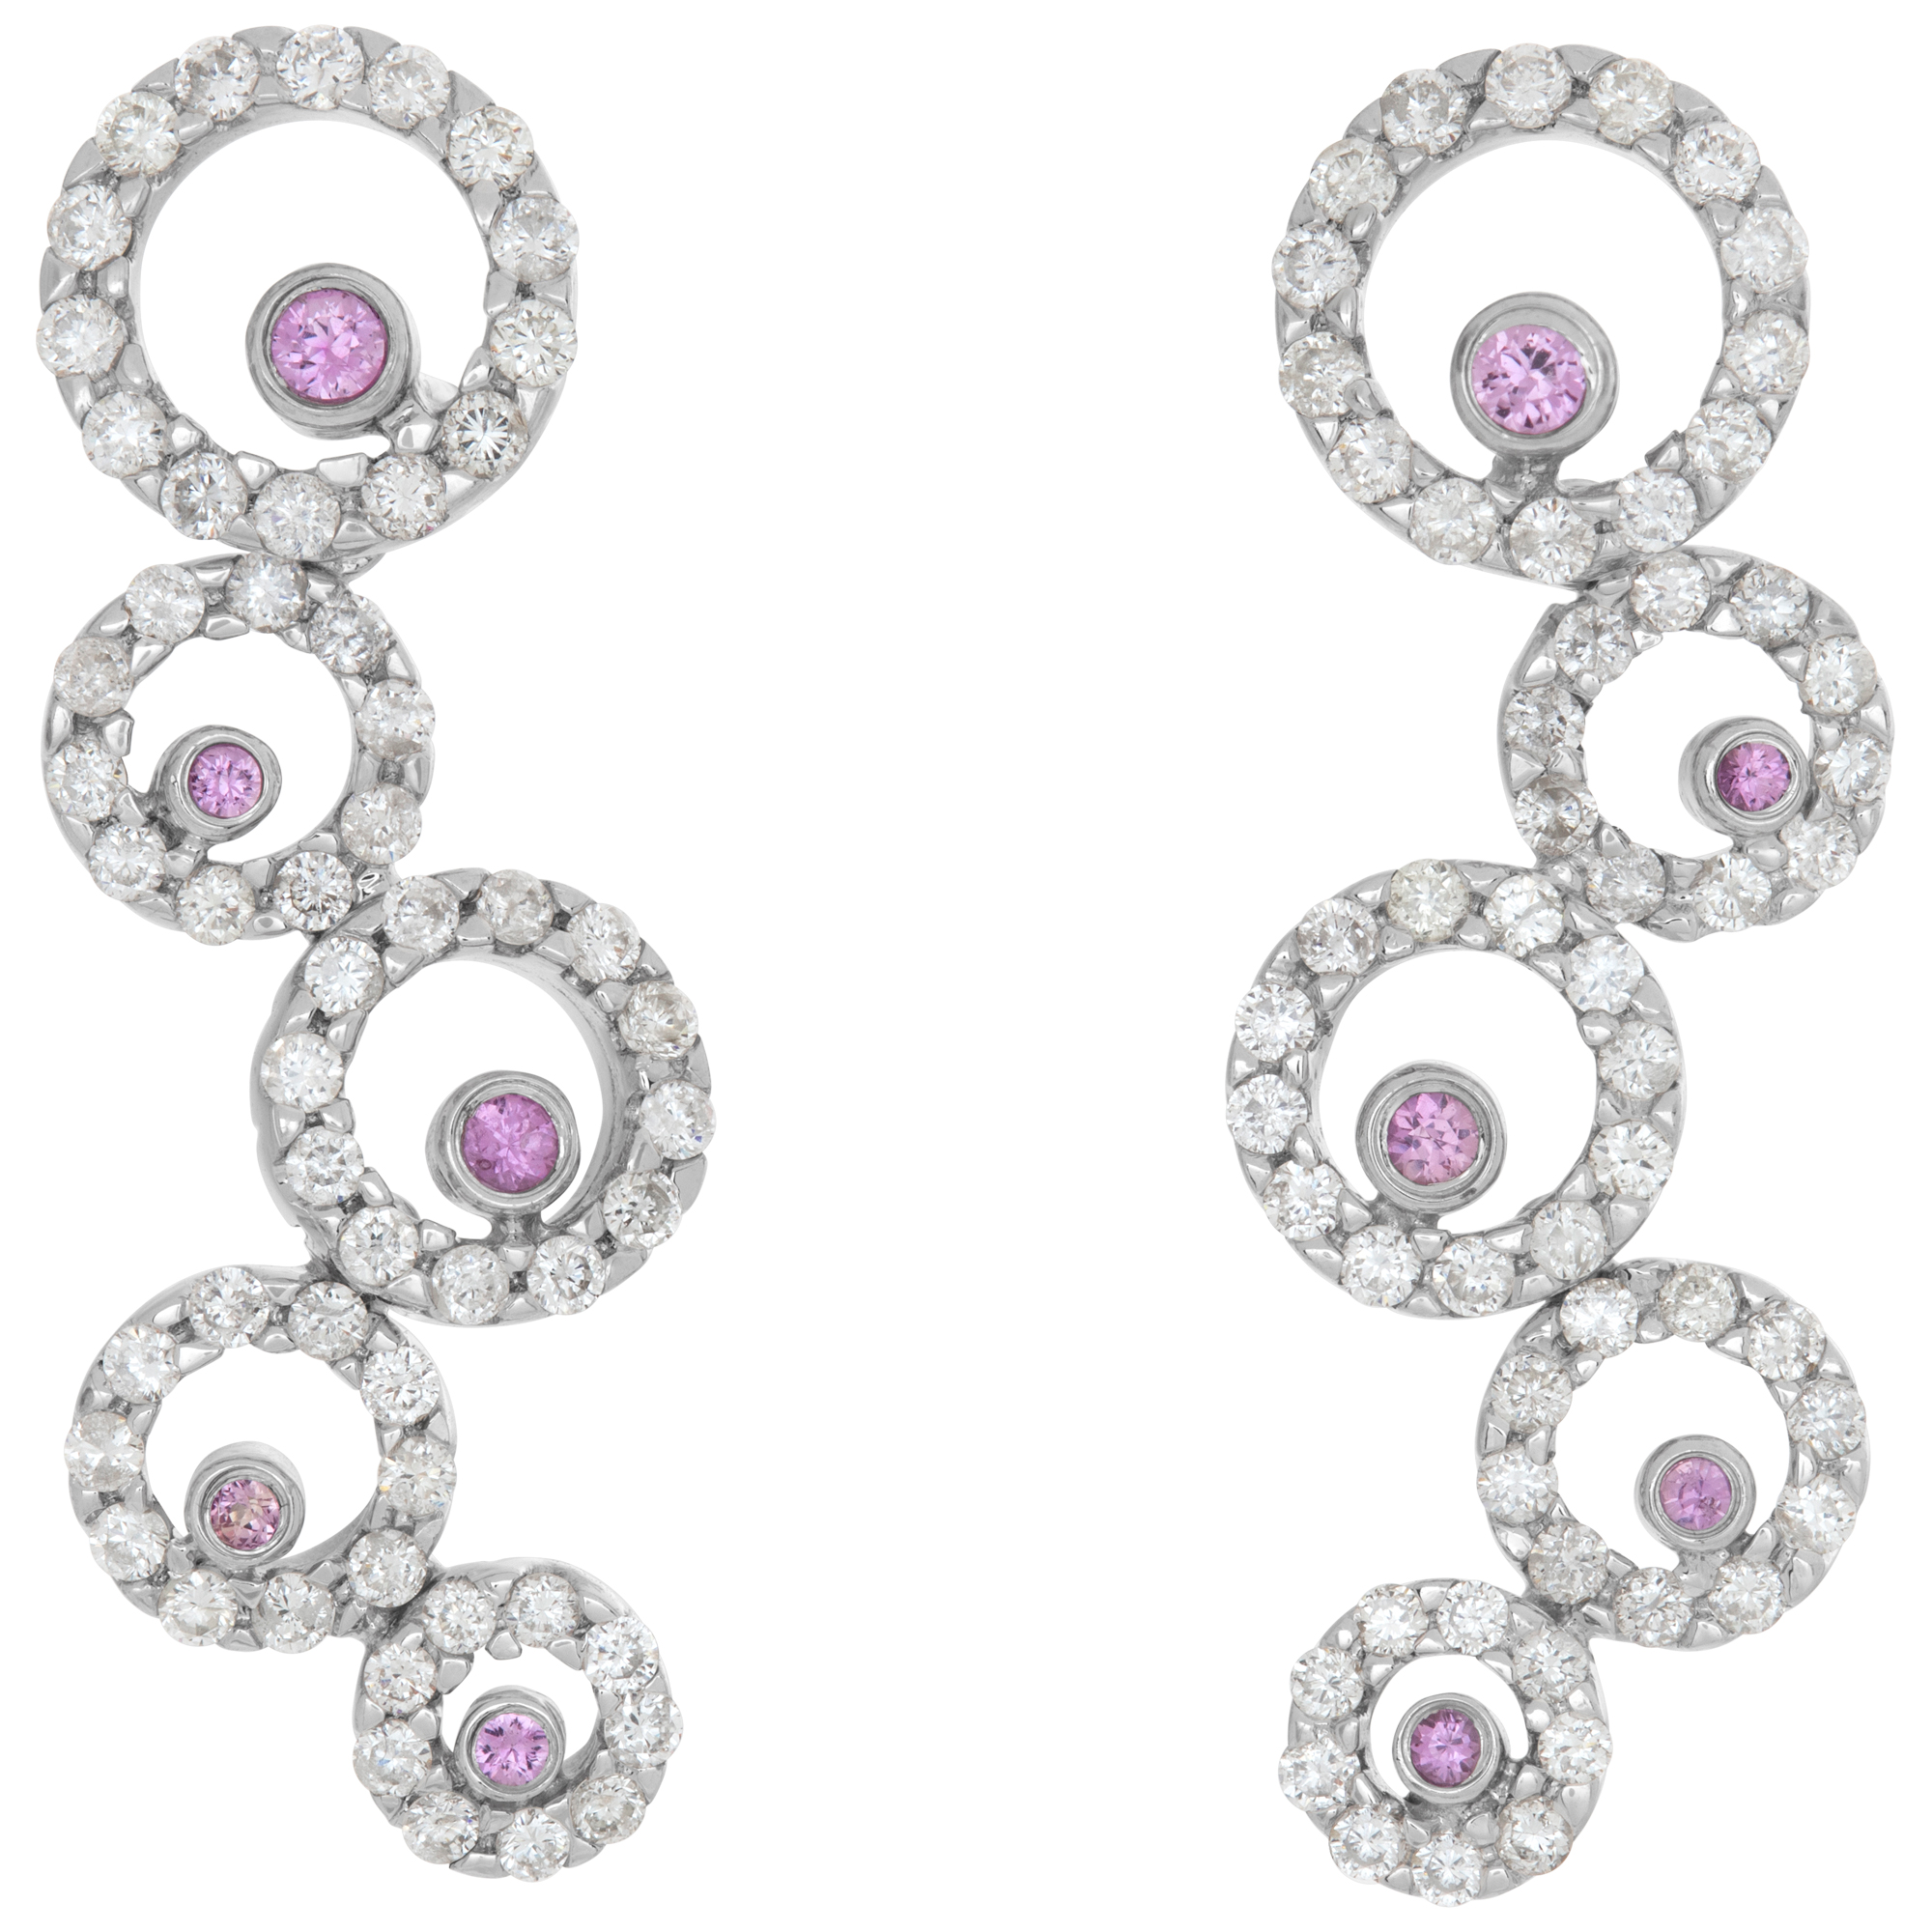 Dangling diamonds halo circle earrings with round cut Torumaline center, set in 14K white gold. image 1